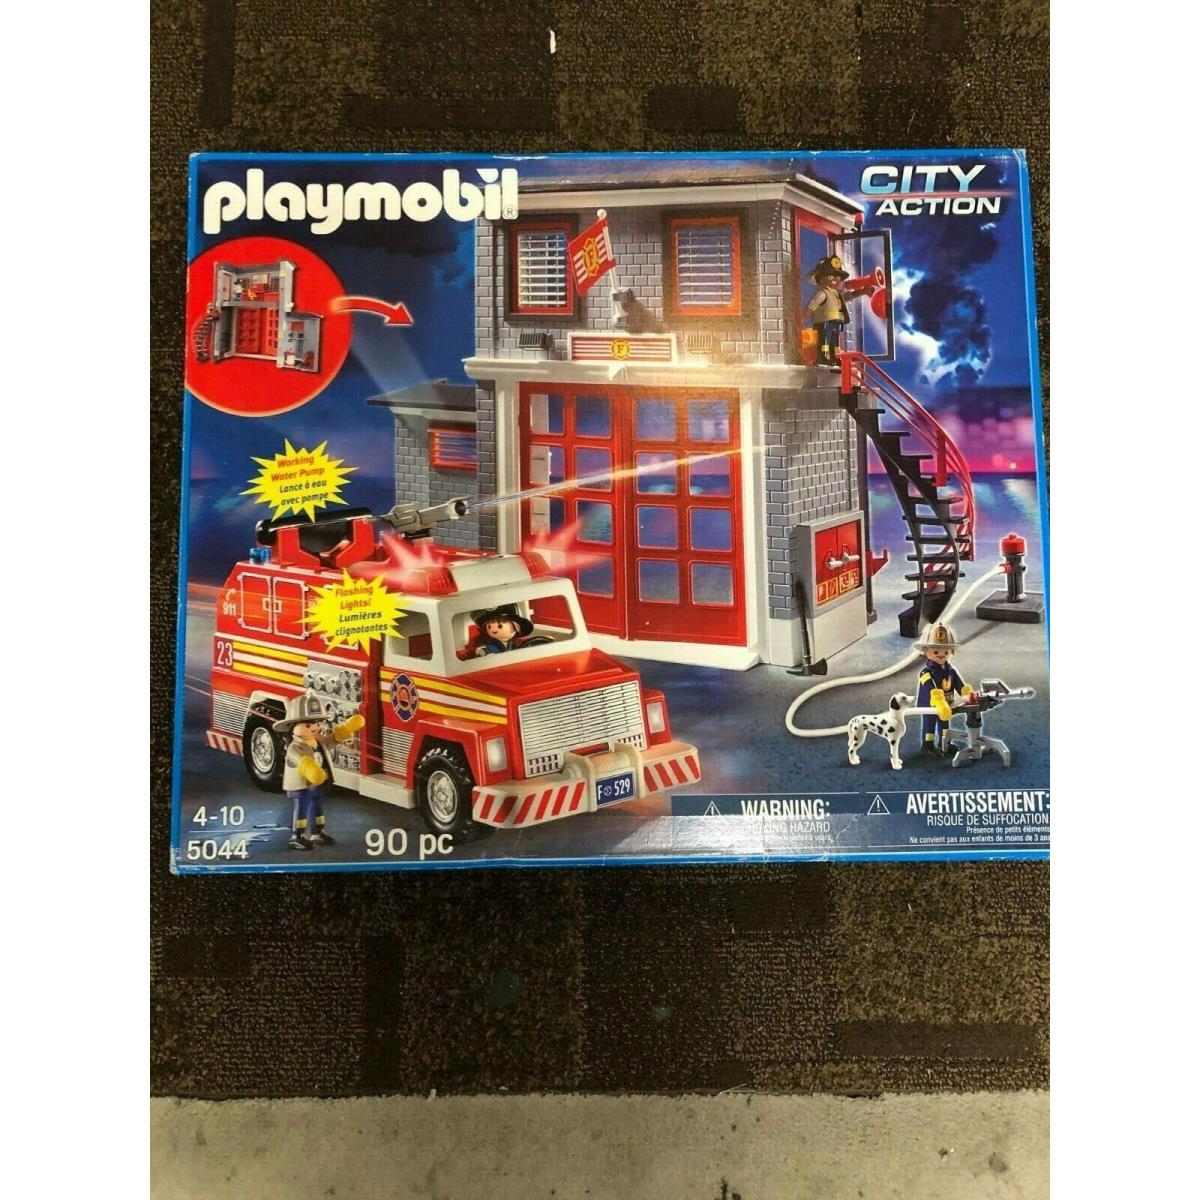 Playmobil 5044 Playmobil Firehouse Playset